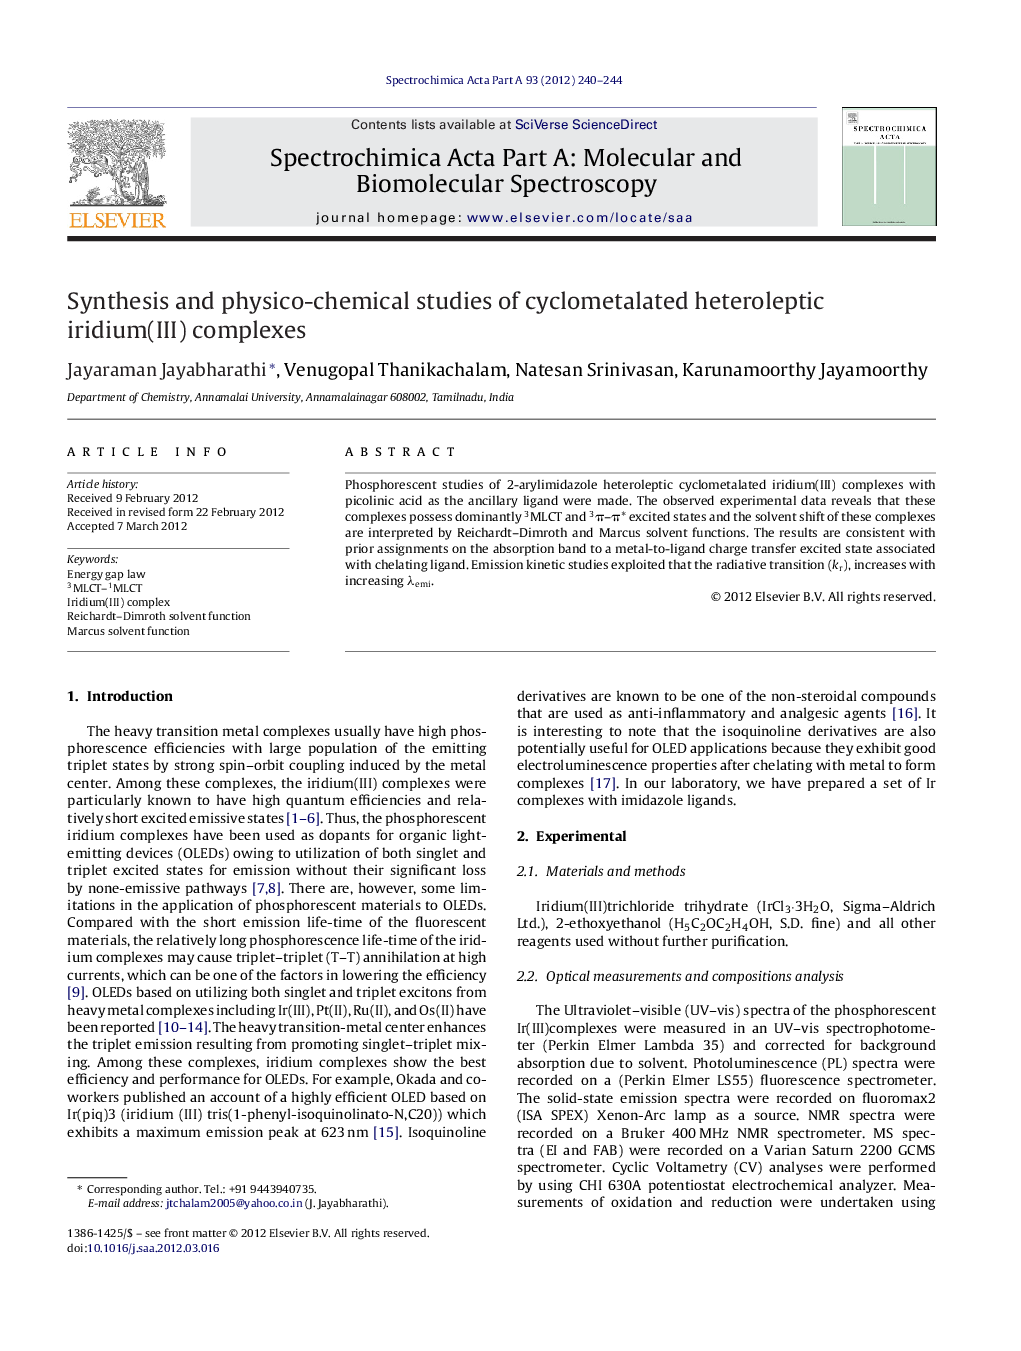 Synthesis and physico-chemical studies of cyclometalated heteroleptic iridium(III) complexes